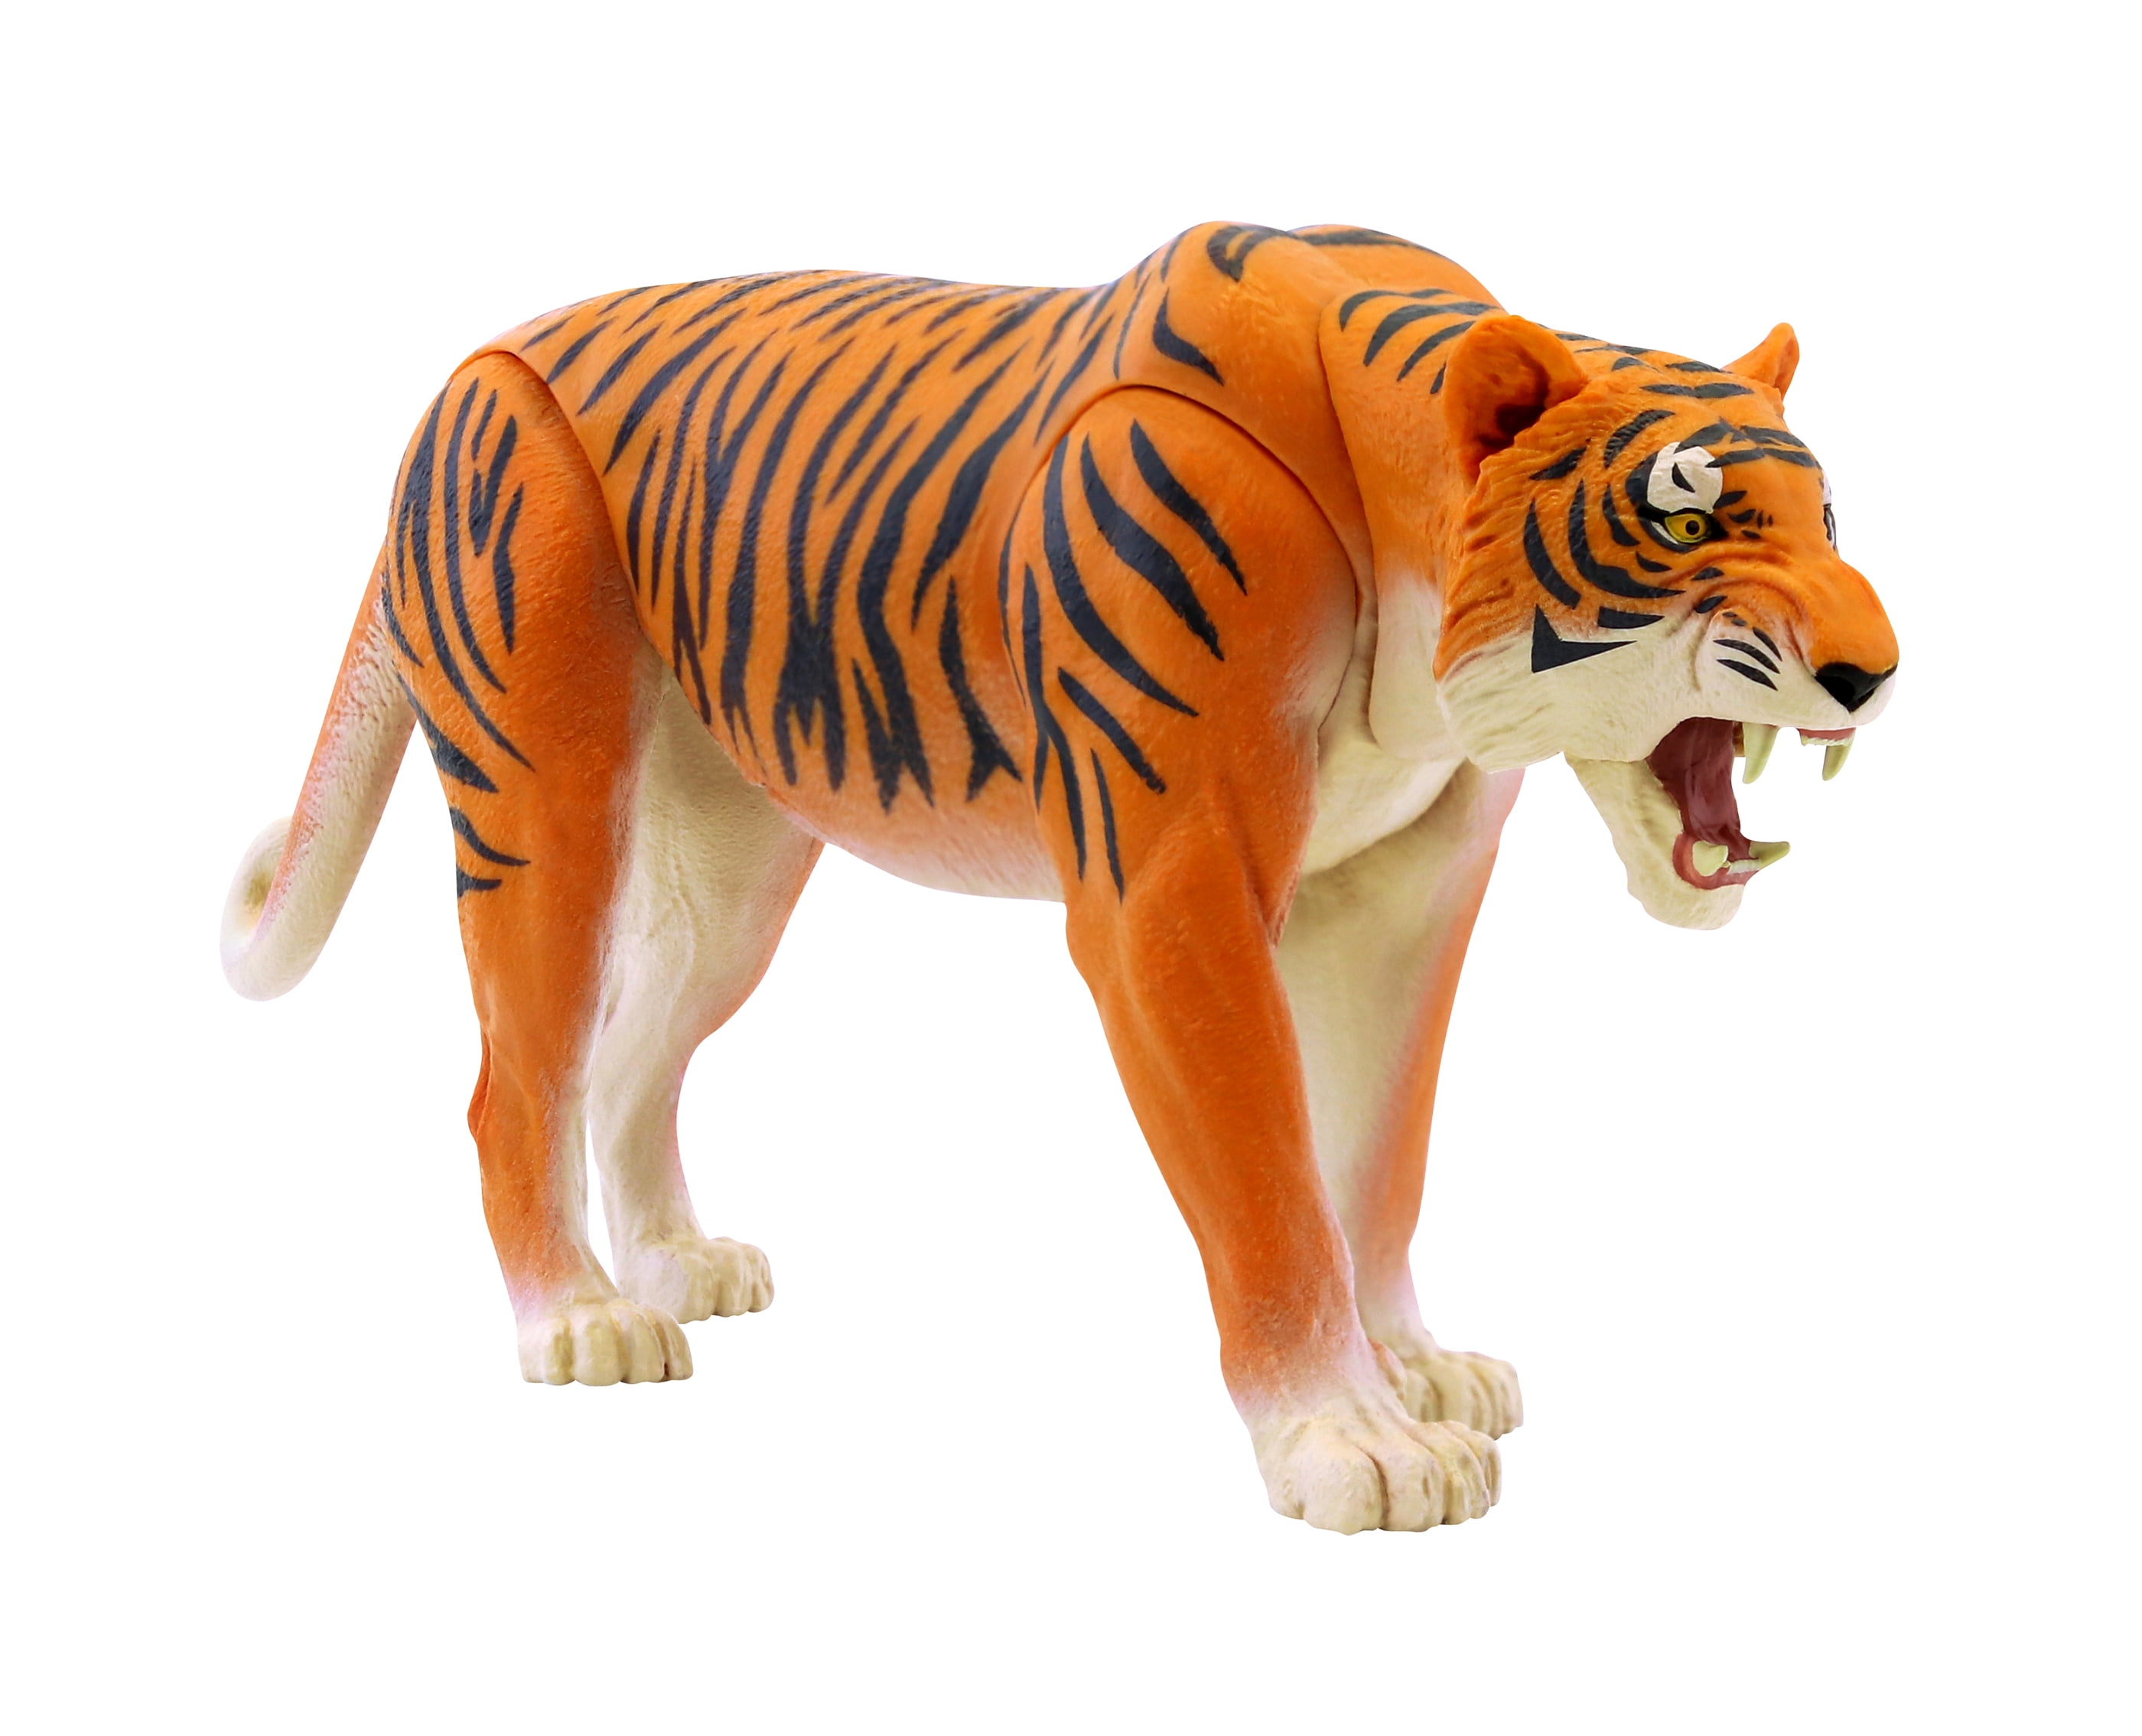 Jumanji Ferocious Tiger Action Figure Walmart 2019 for sale online